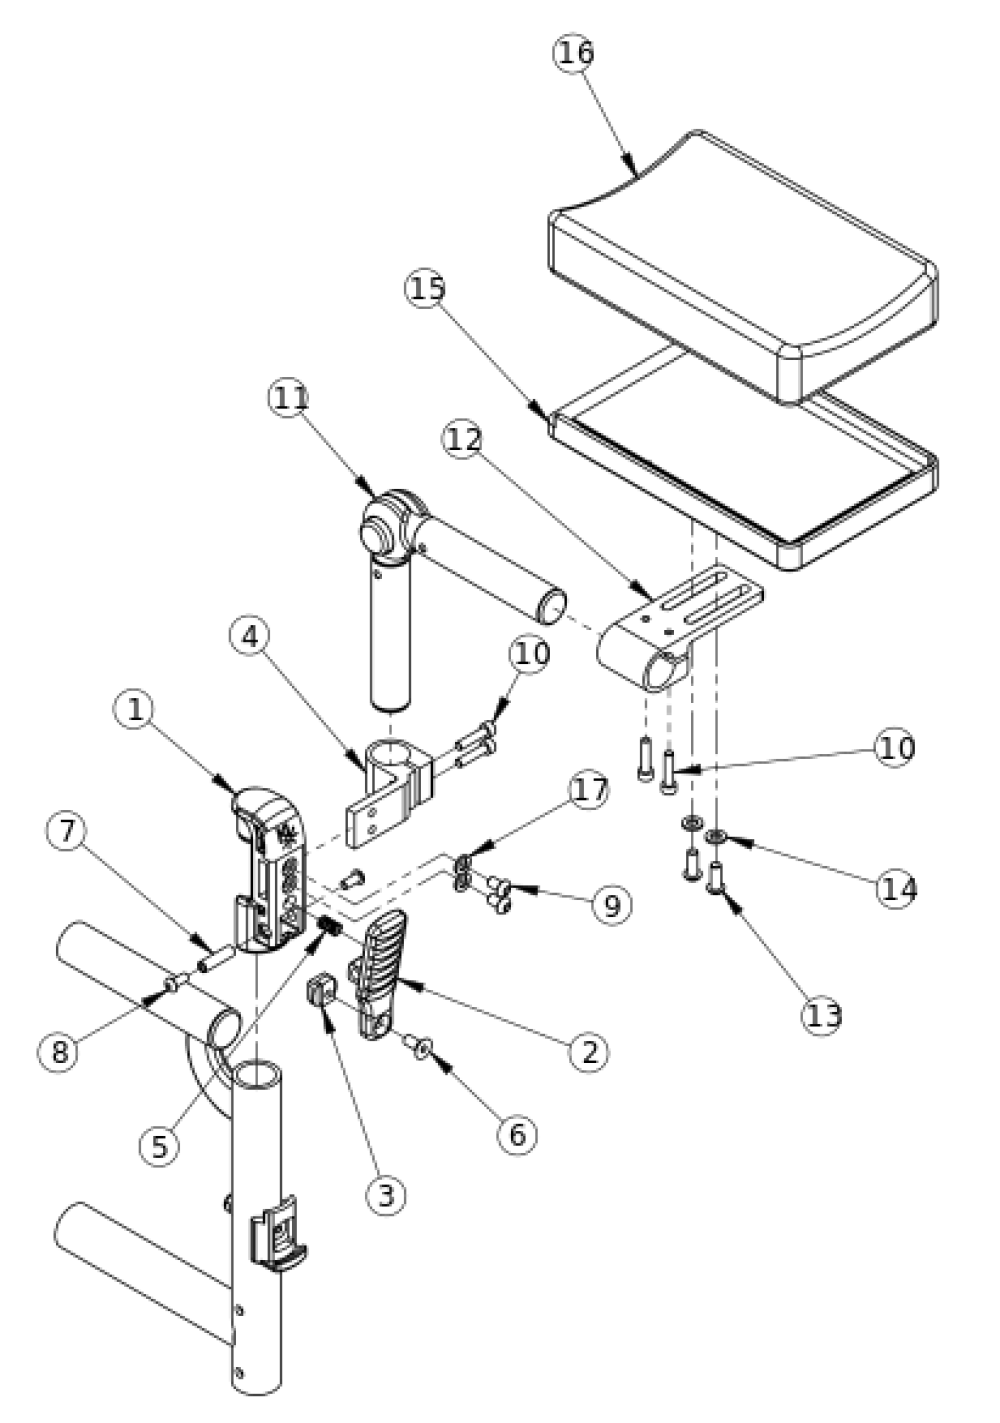 Residual Limb Support parts diagram